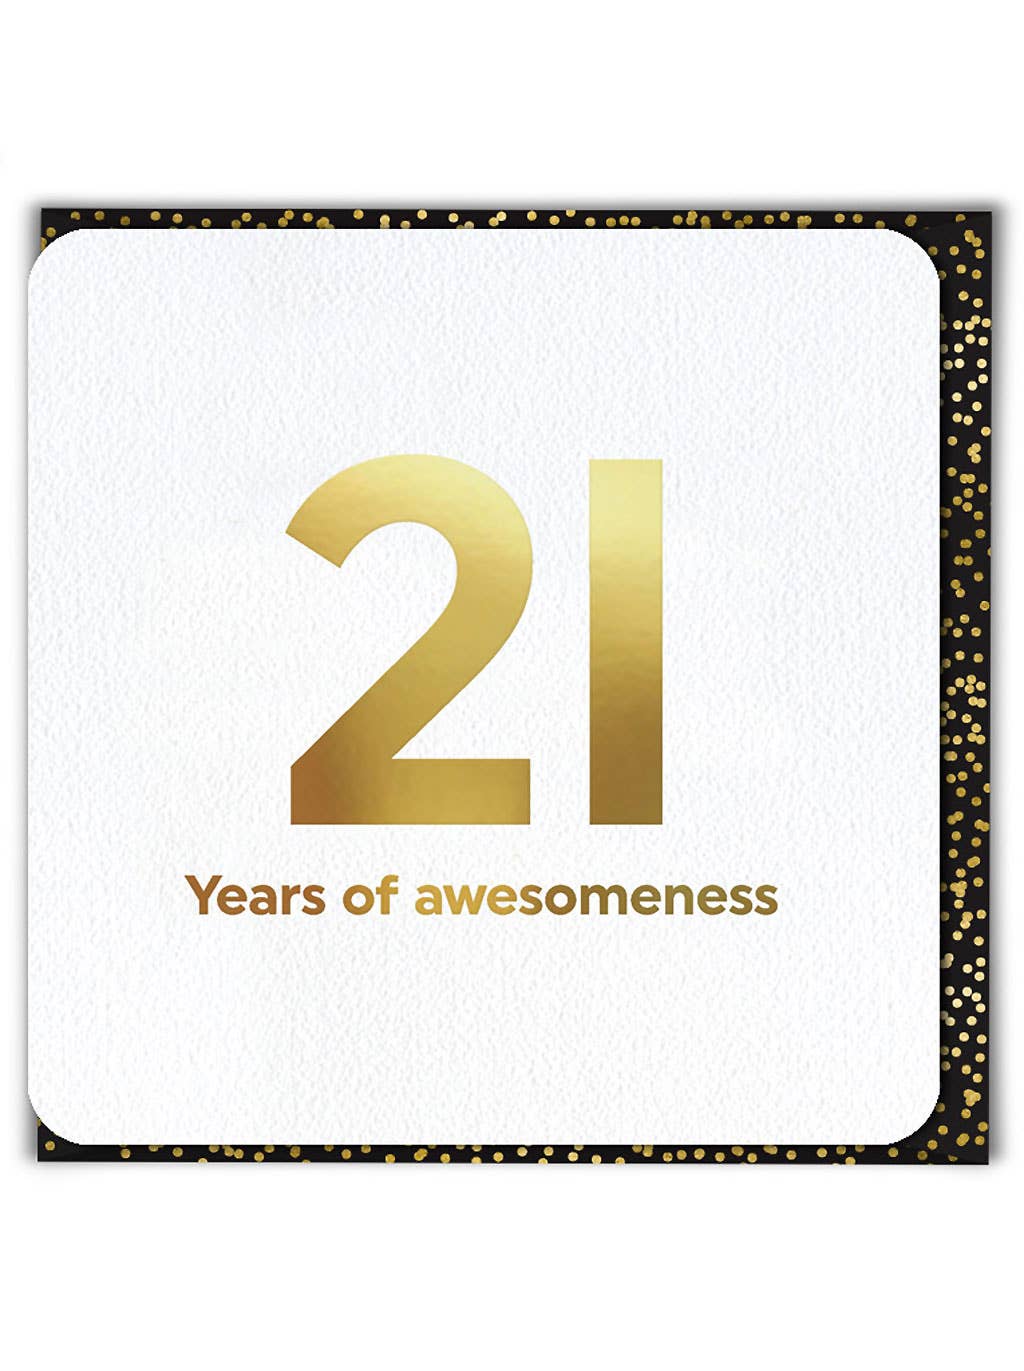 Milestone Birthday Card - 21 Years of Awesomeness